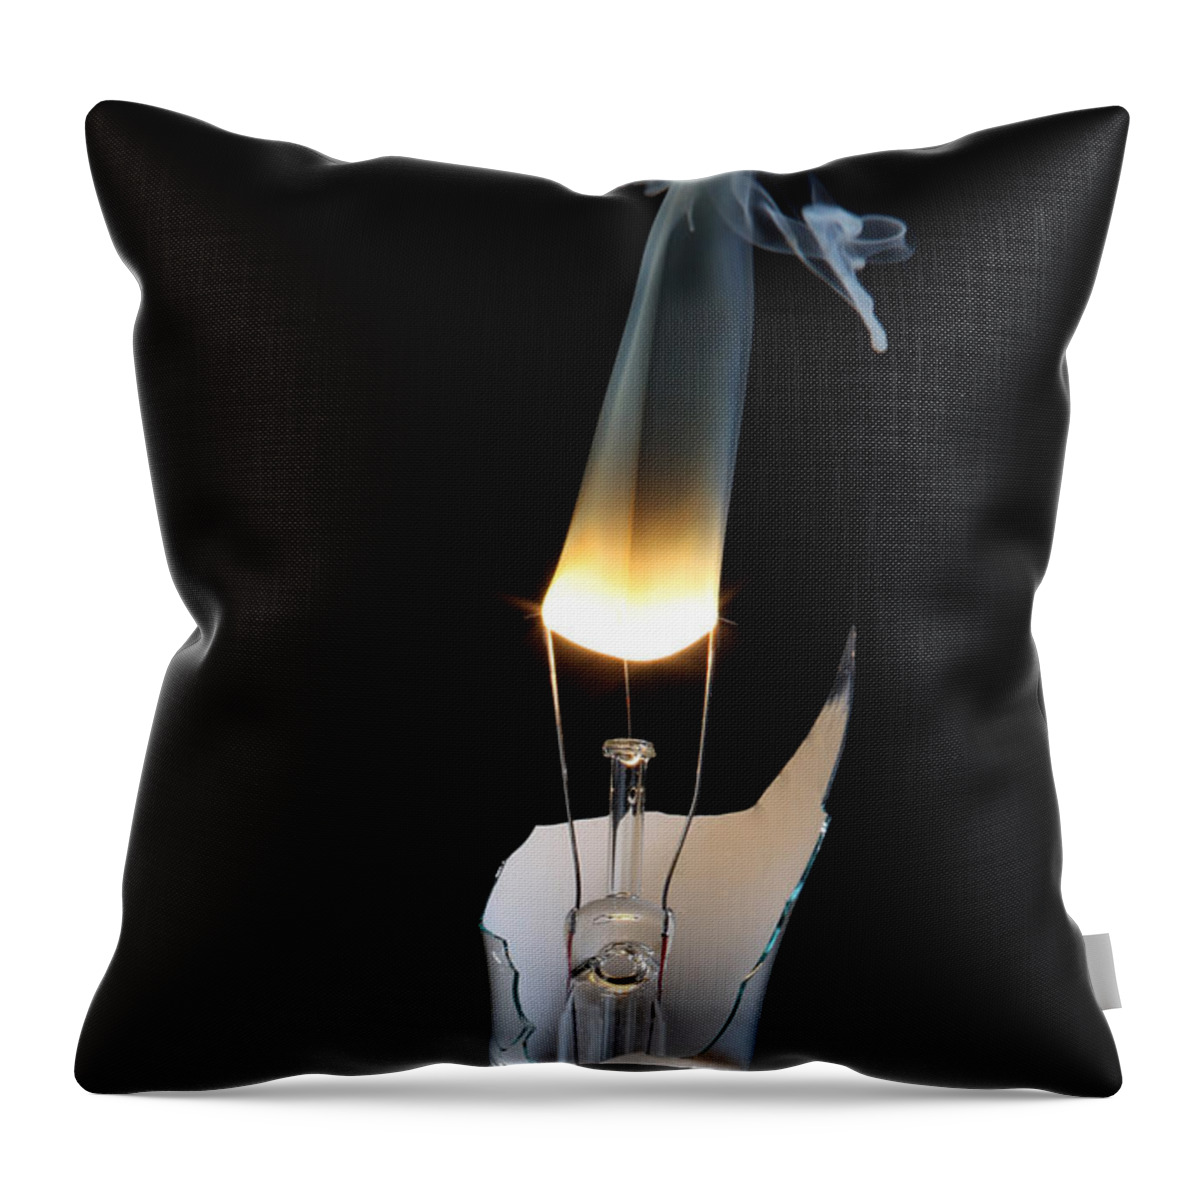 Bulb Throw Pillow featuring the photograph Light and Smoke by Robert Och